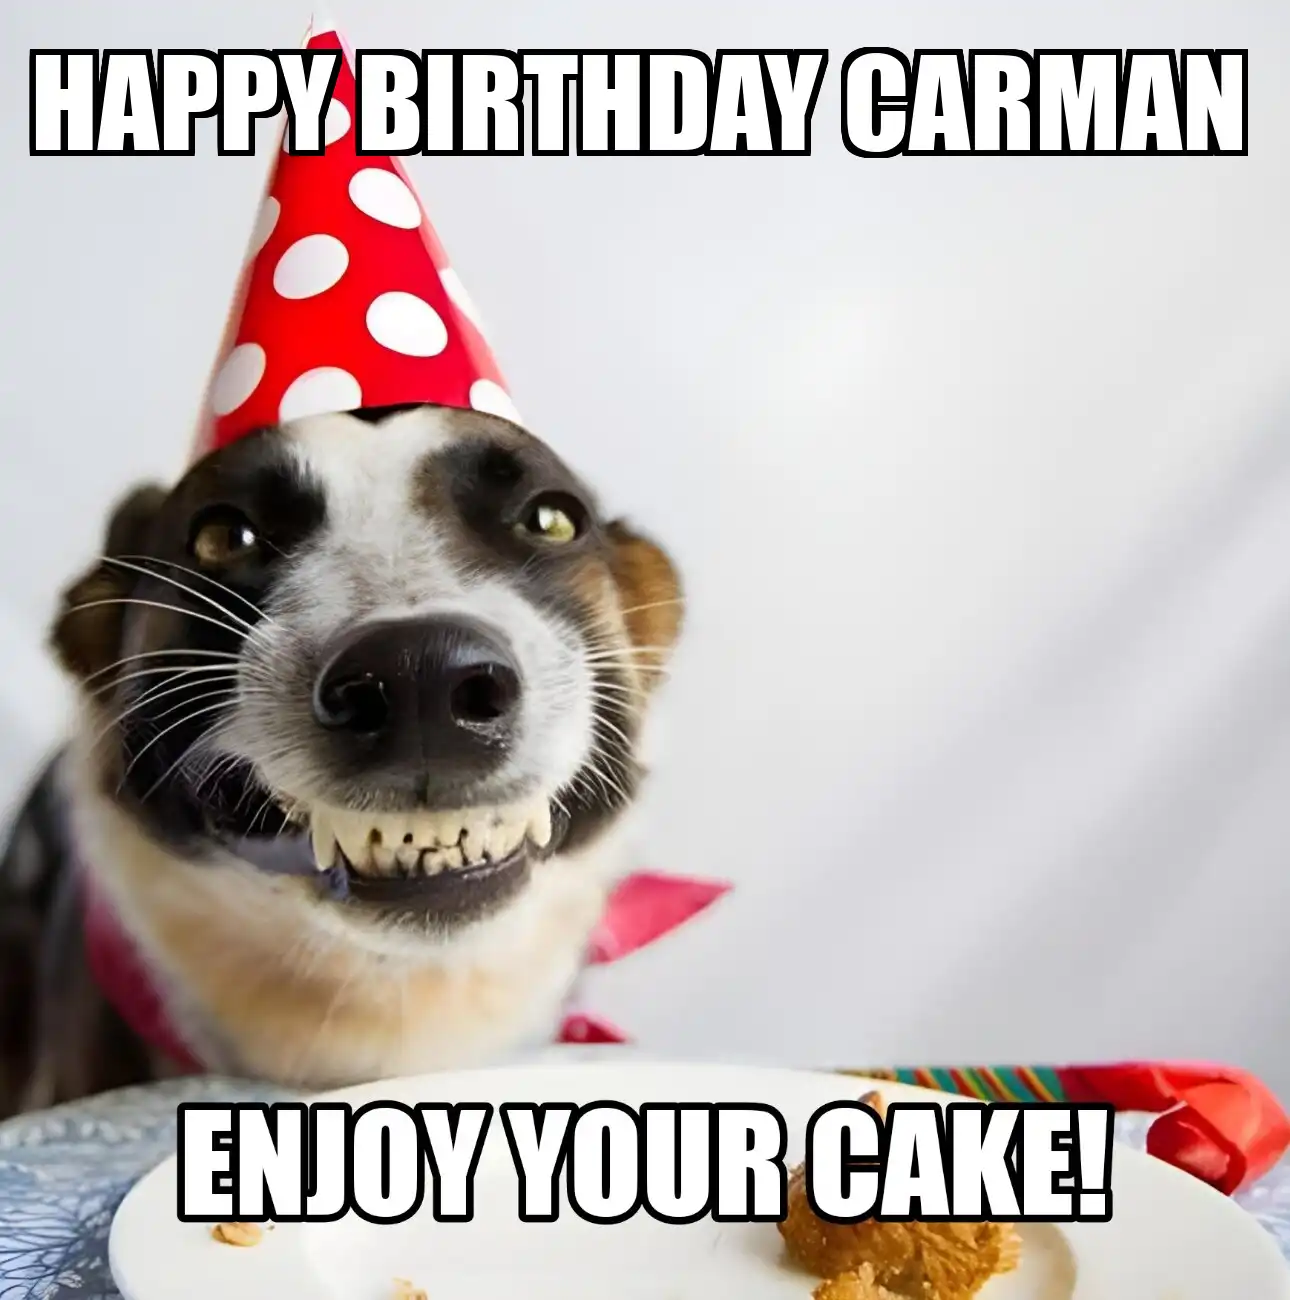 Happy Birthday Carman Enjoy Your Cake Dog Meme